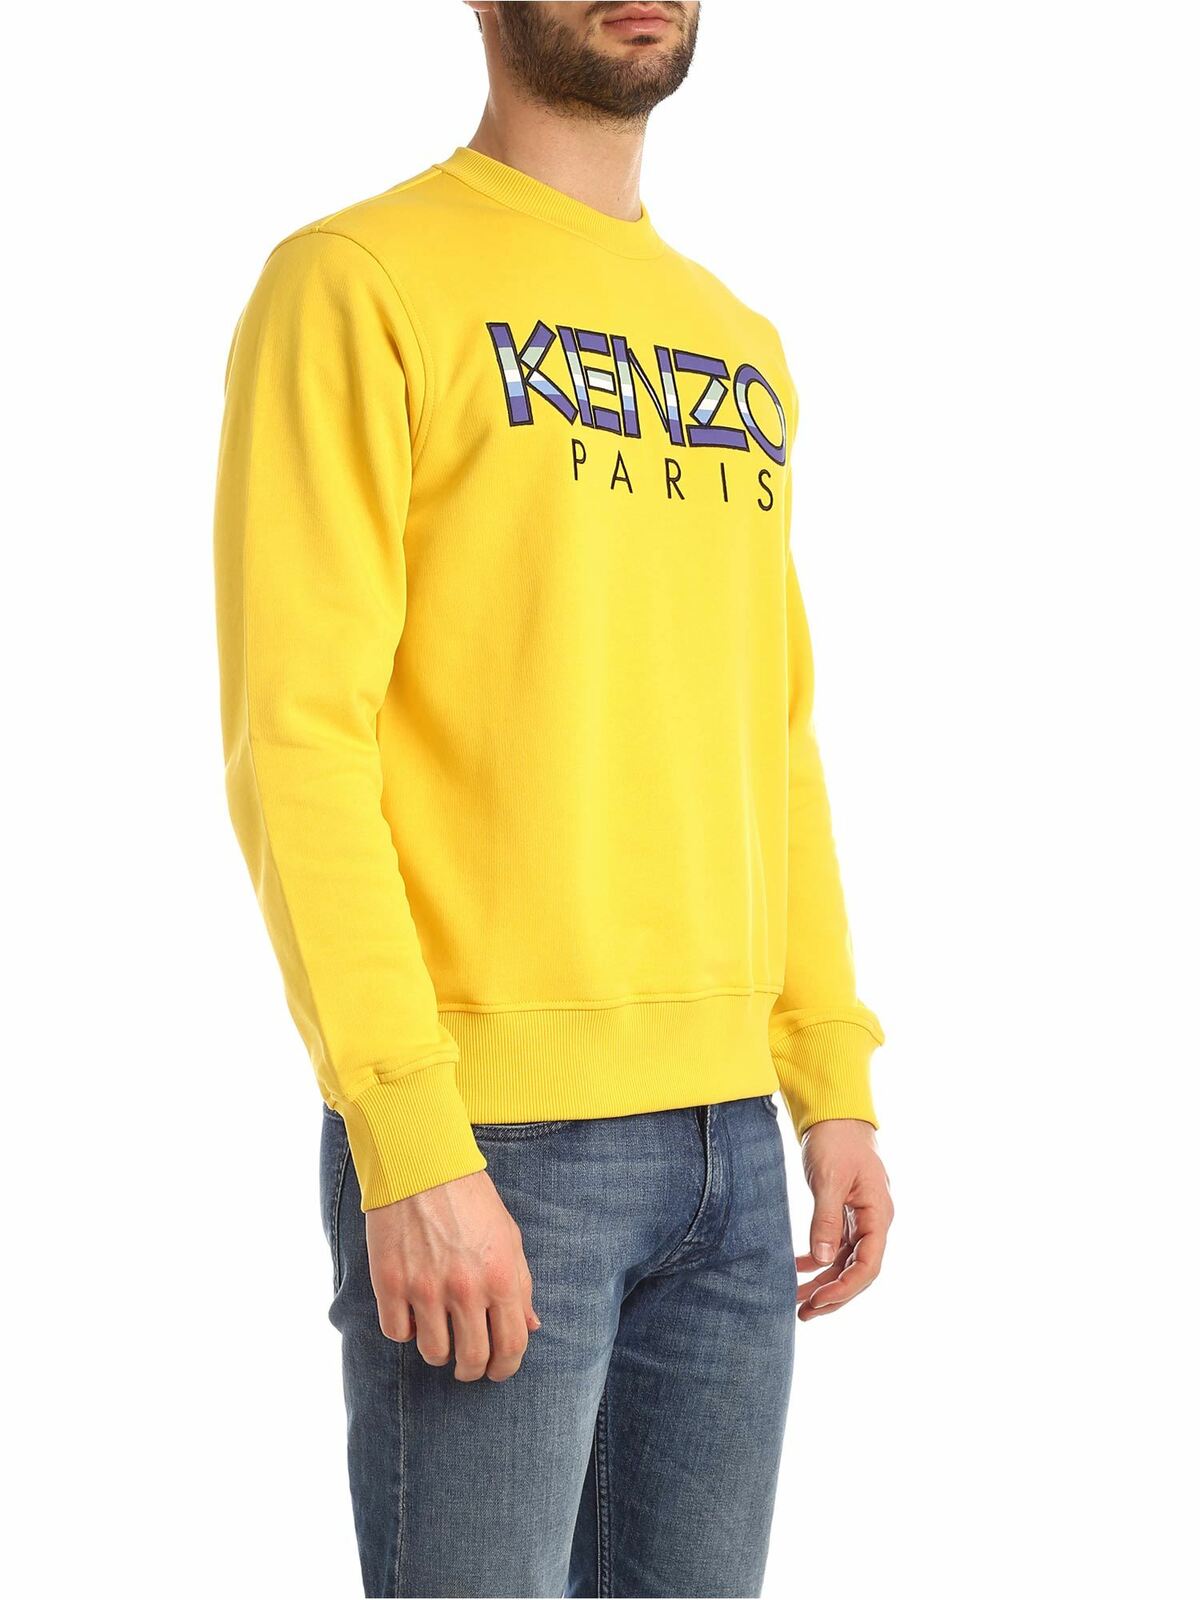 buitenaards wezen wijsheid wagon Sweatshirts & Sweaters Kenzo - Kenzo Paris sweatshirt in yellow -  5SW0004MD39